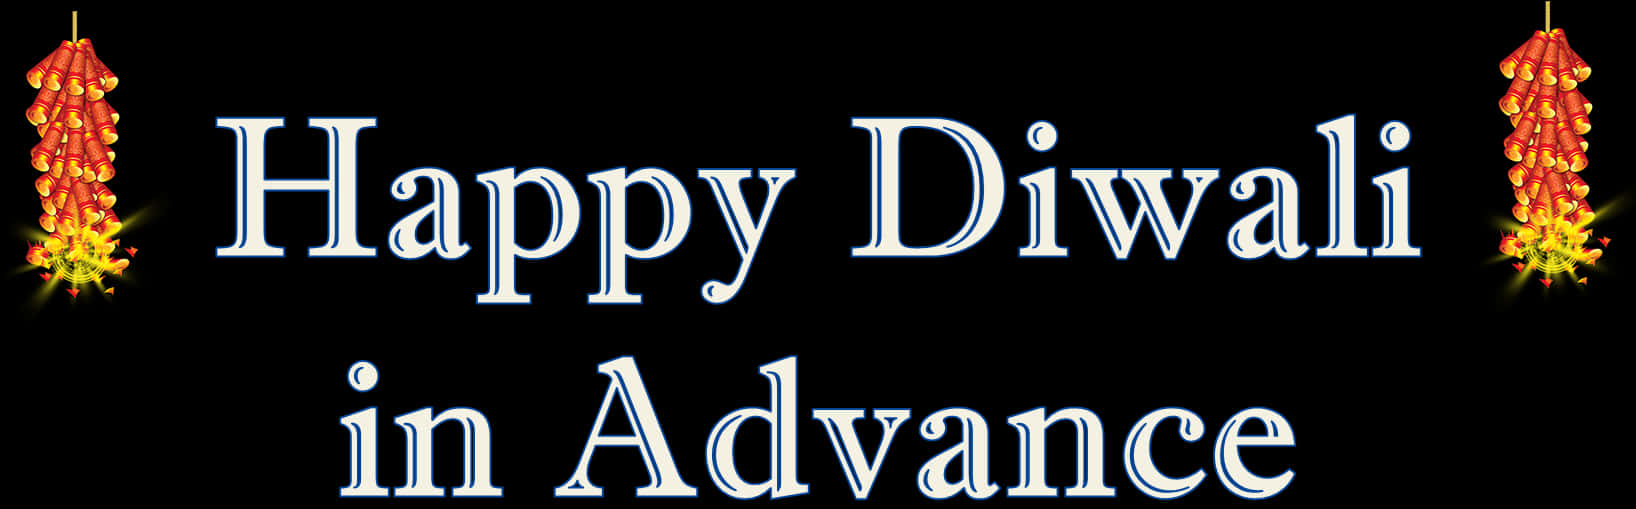 Happy Diwaliin Advance Banner